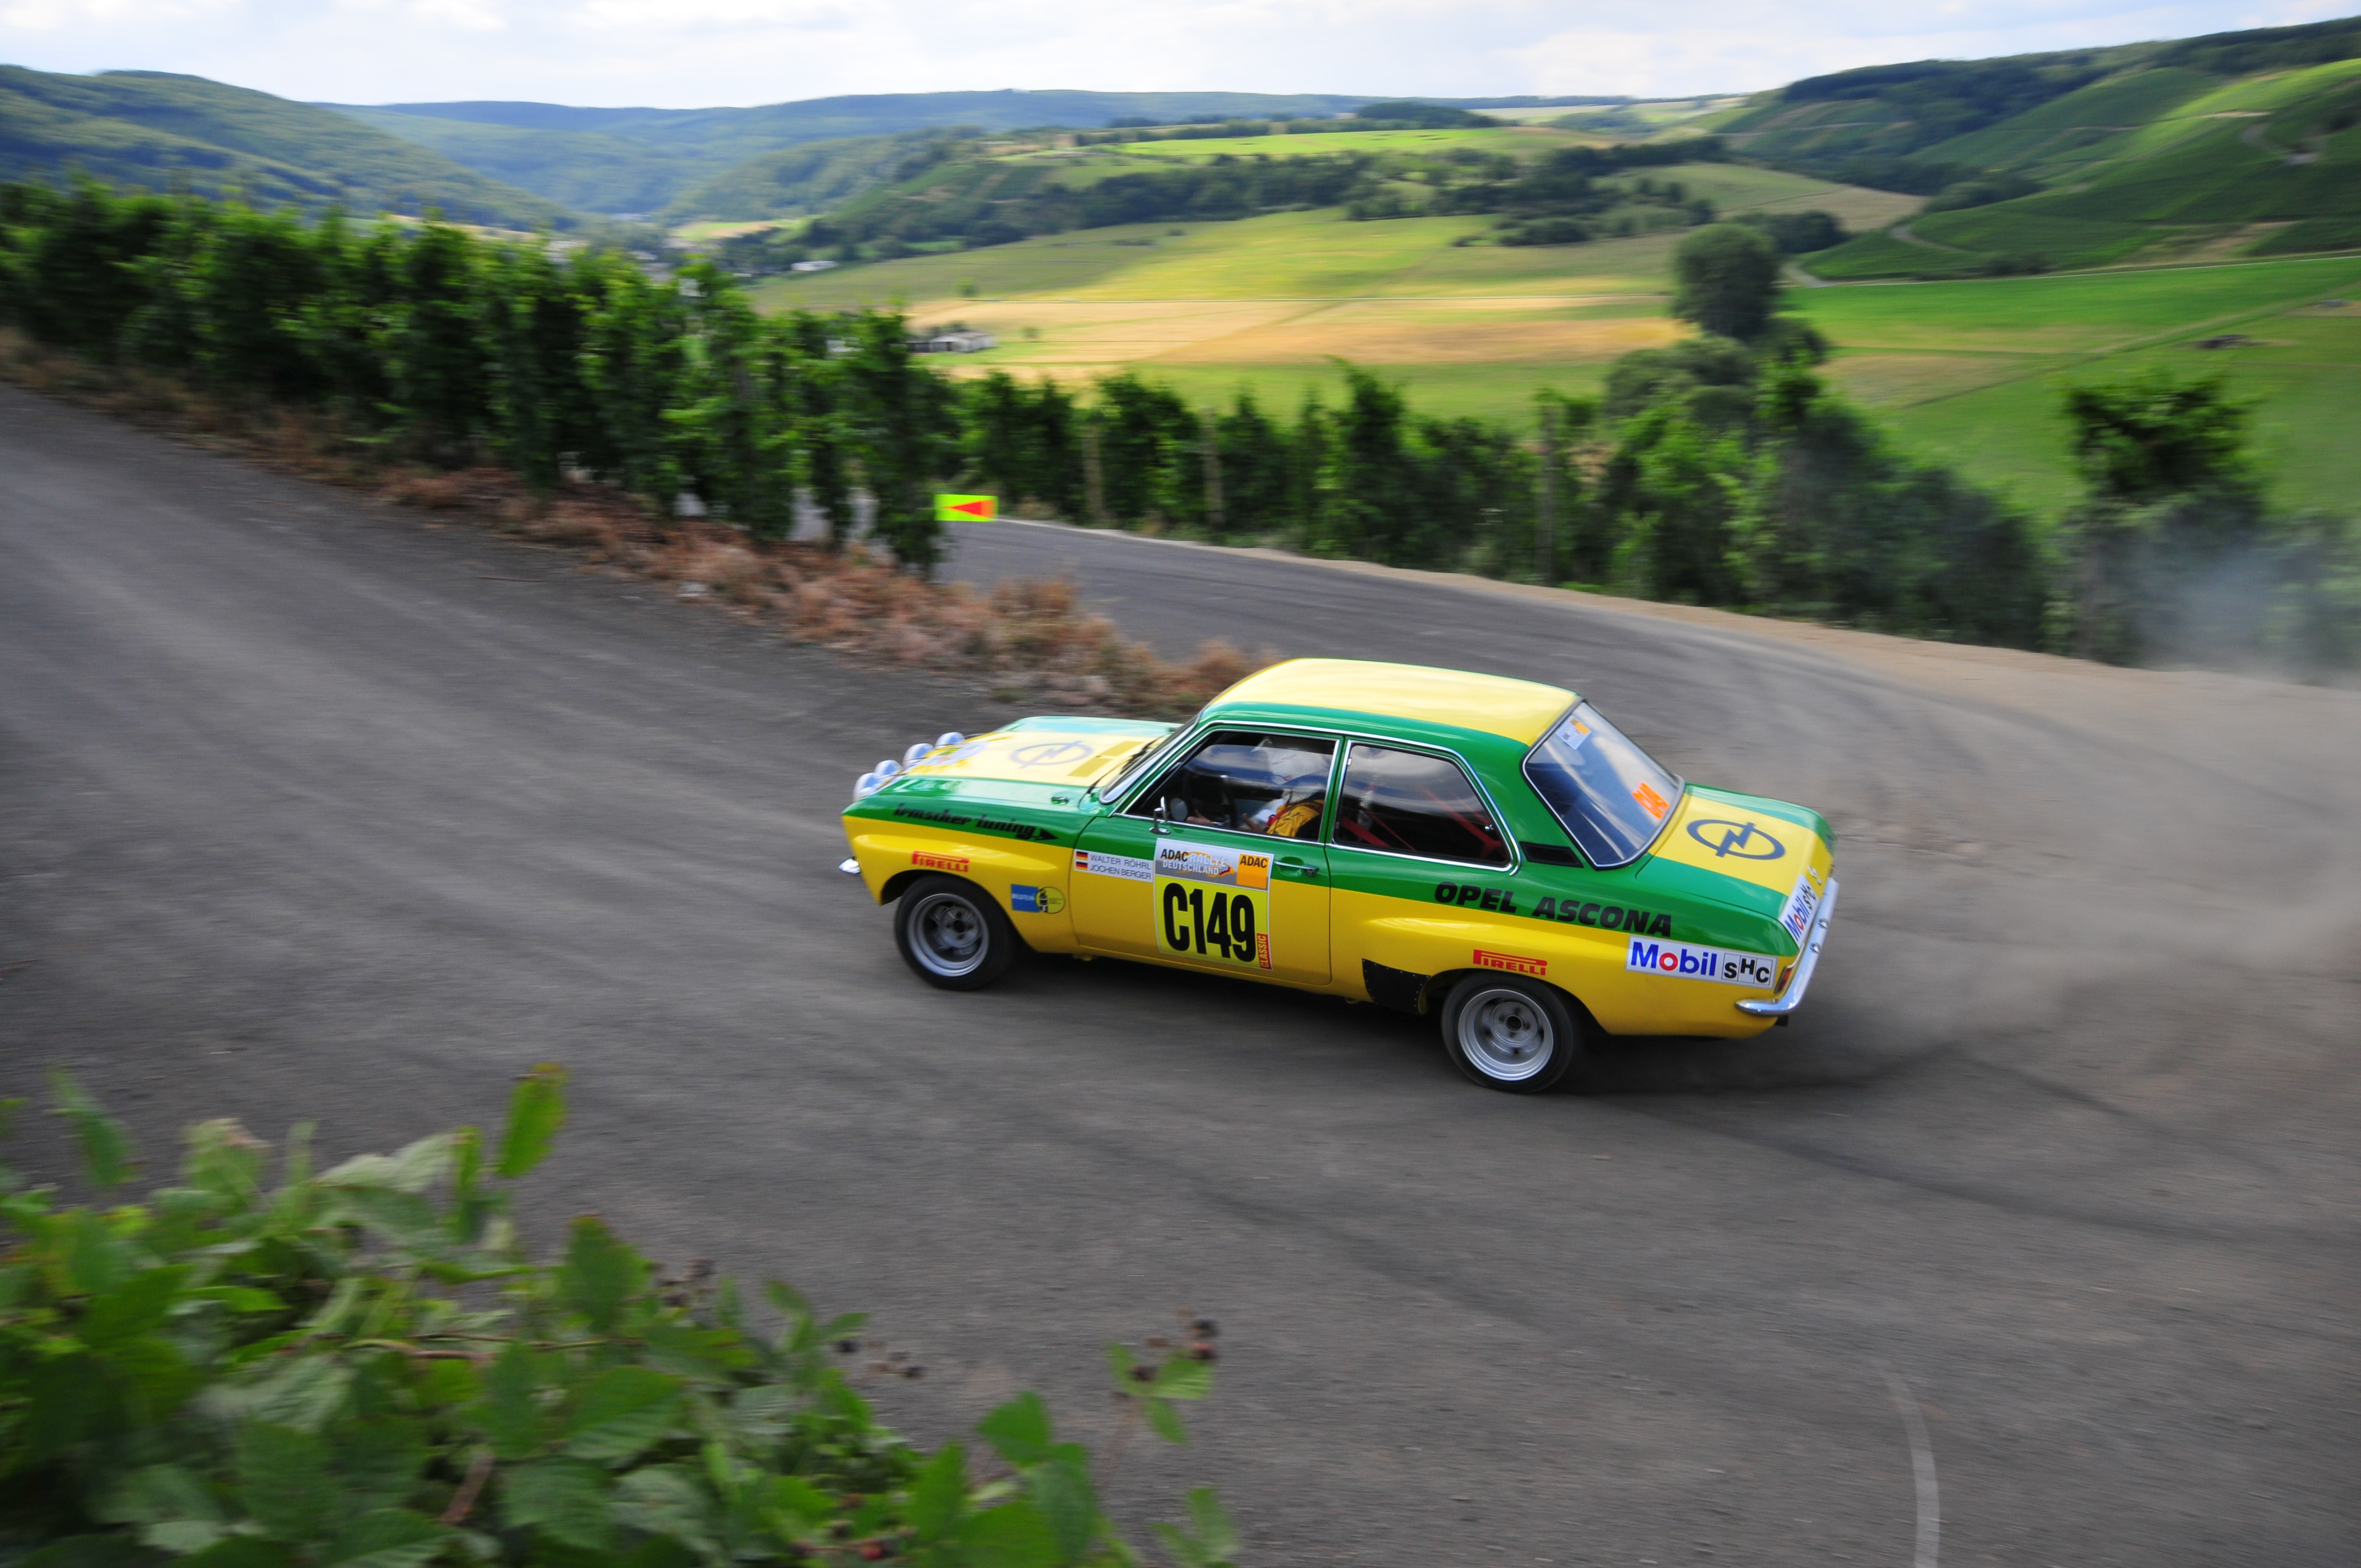 Opel Rallye #9